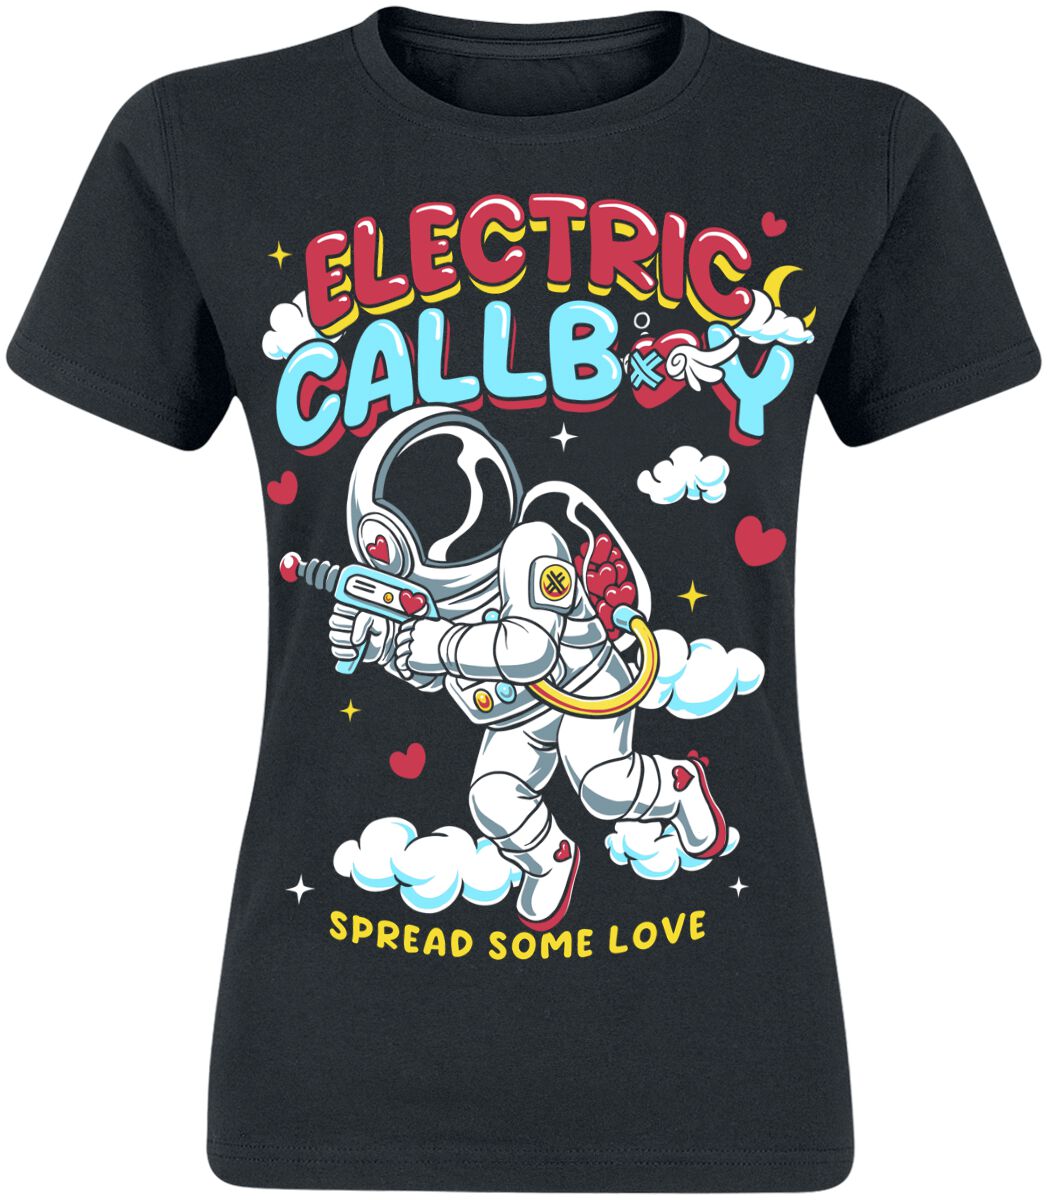 Electric Callboy Spread Some Love T-Shirt schwarz in M